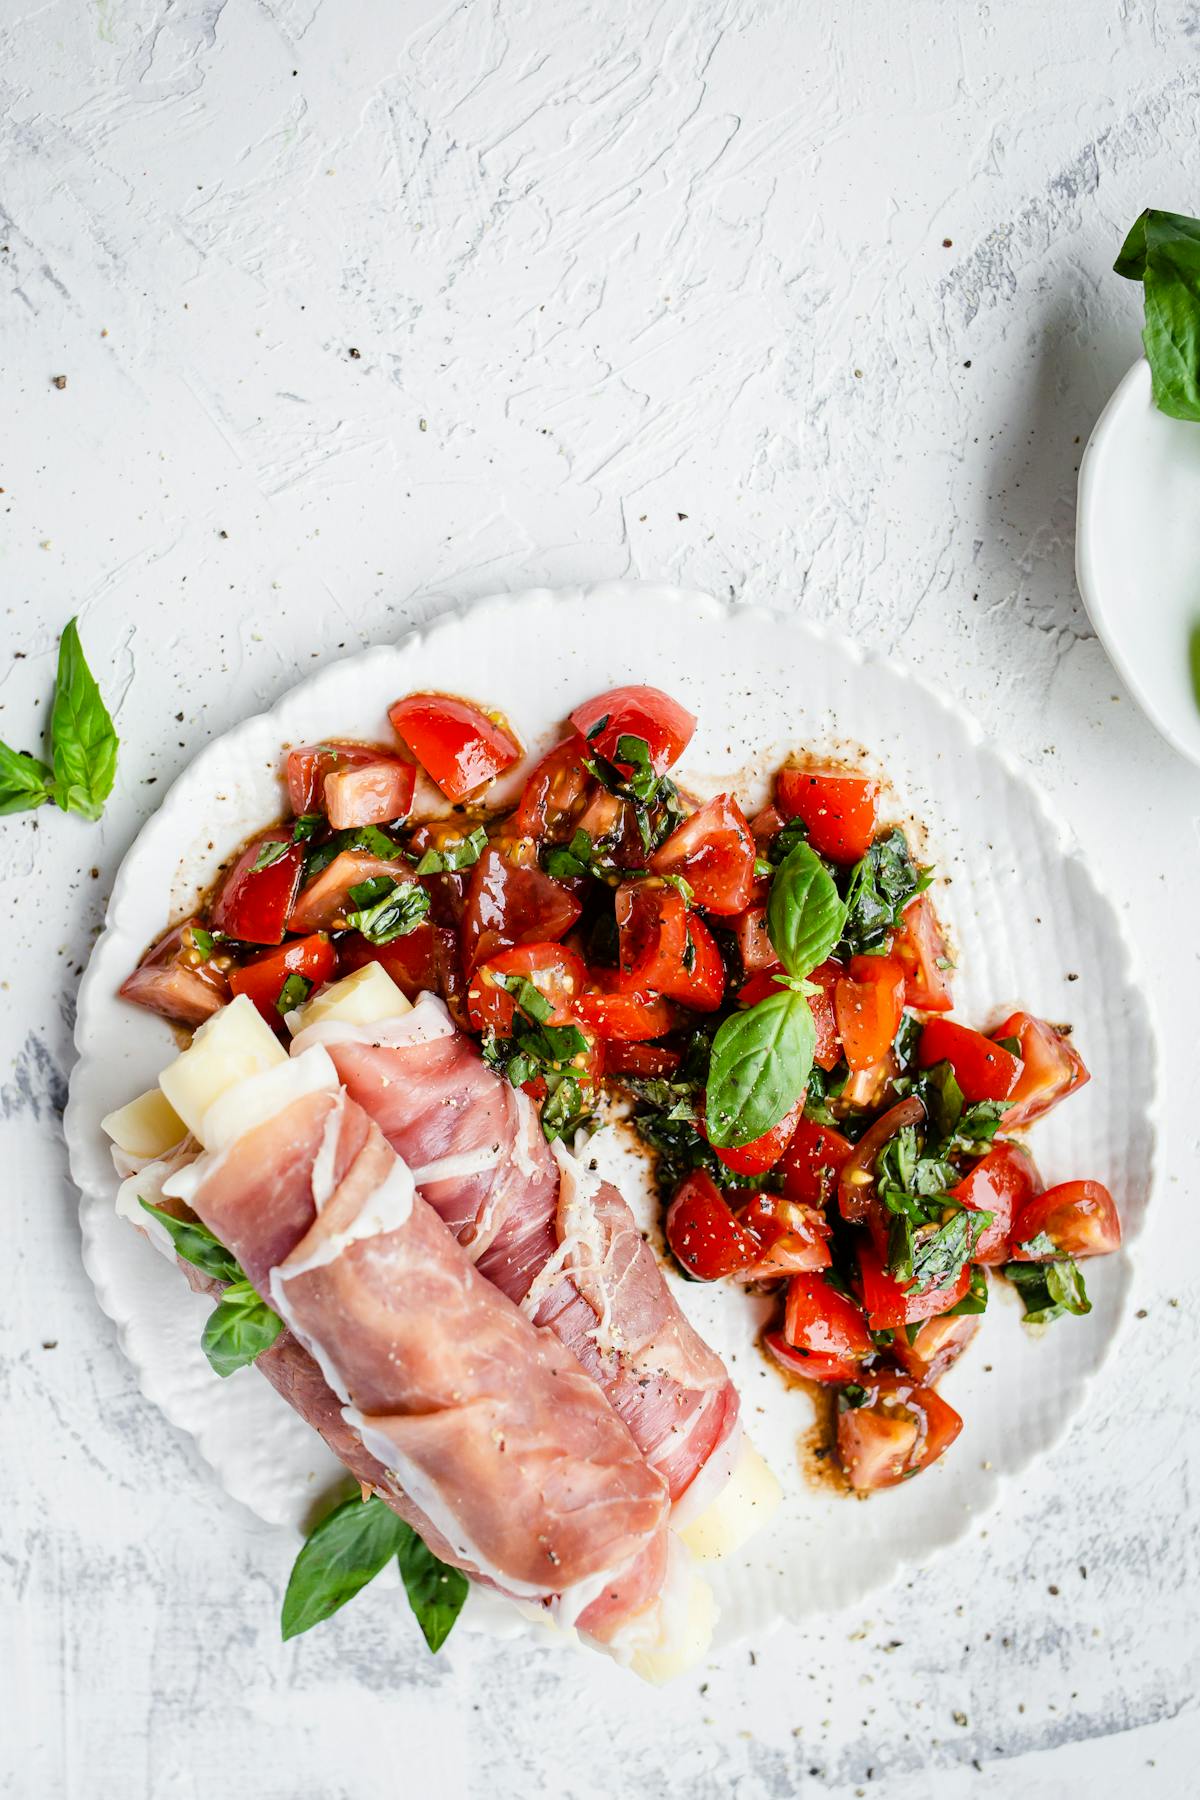 Prosciutto-wrapped mozzarella sticks with tomato basil salad